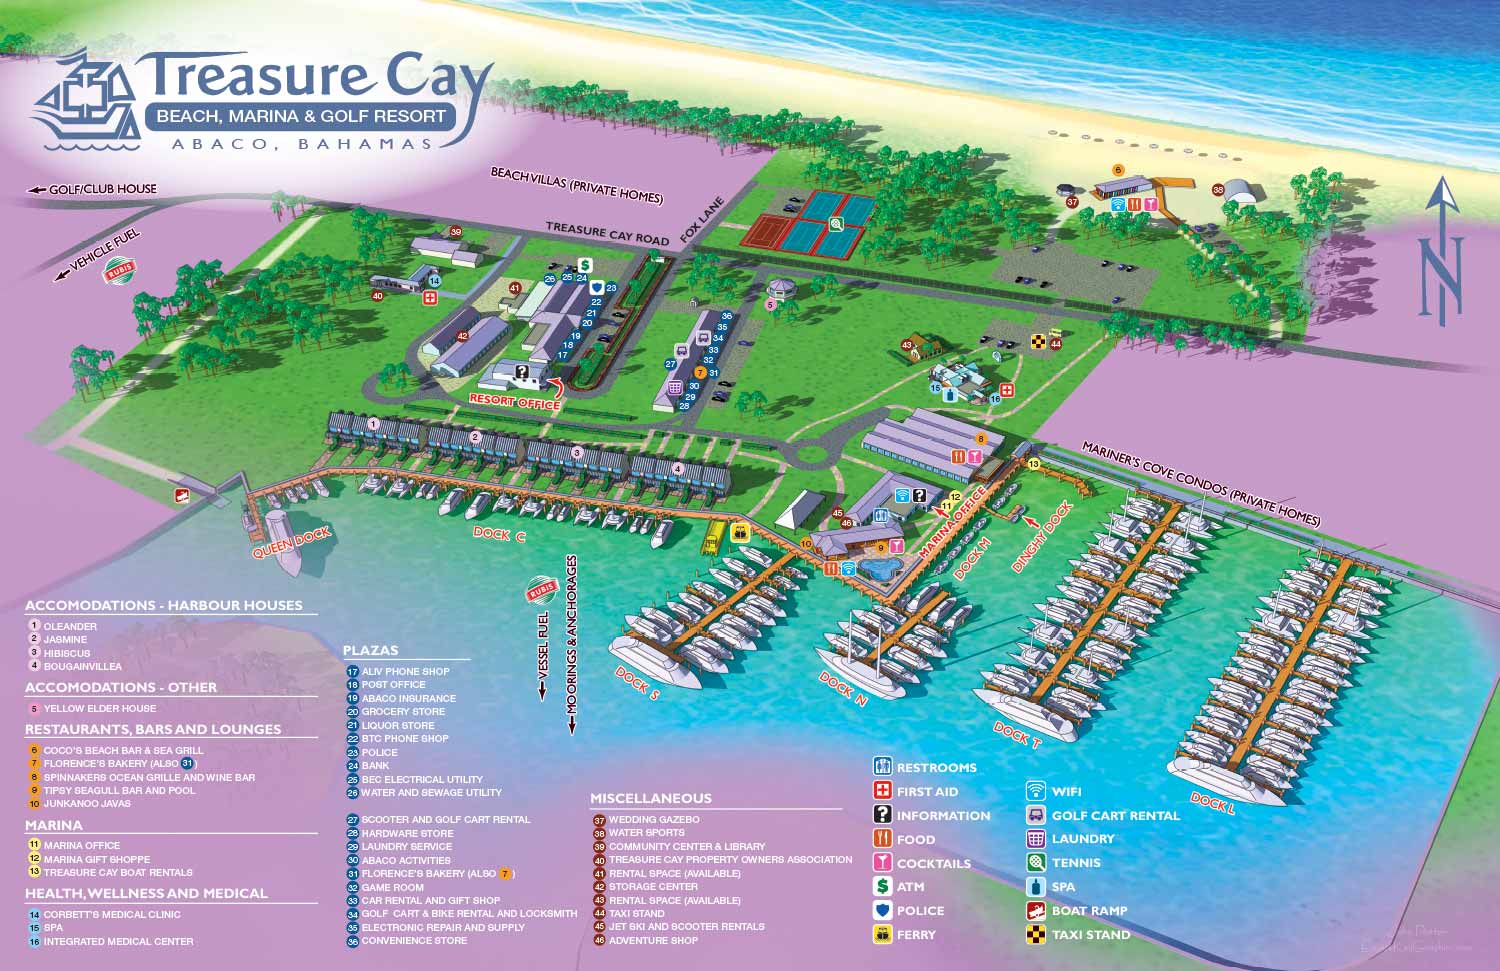 resort marina map